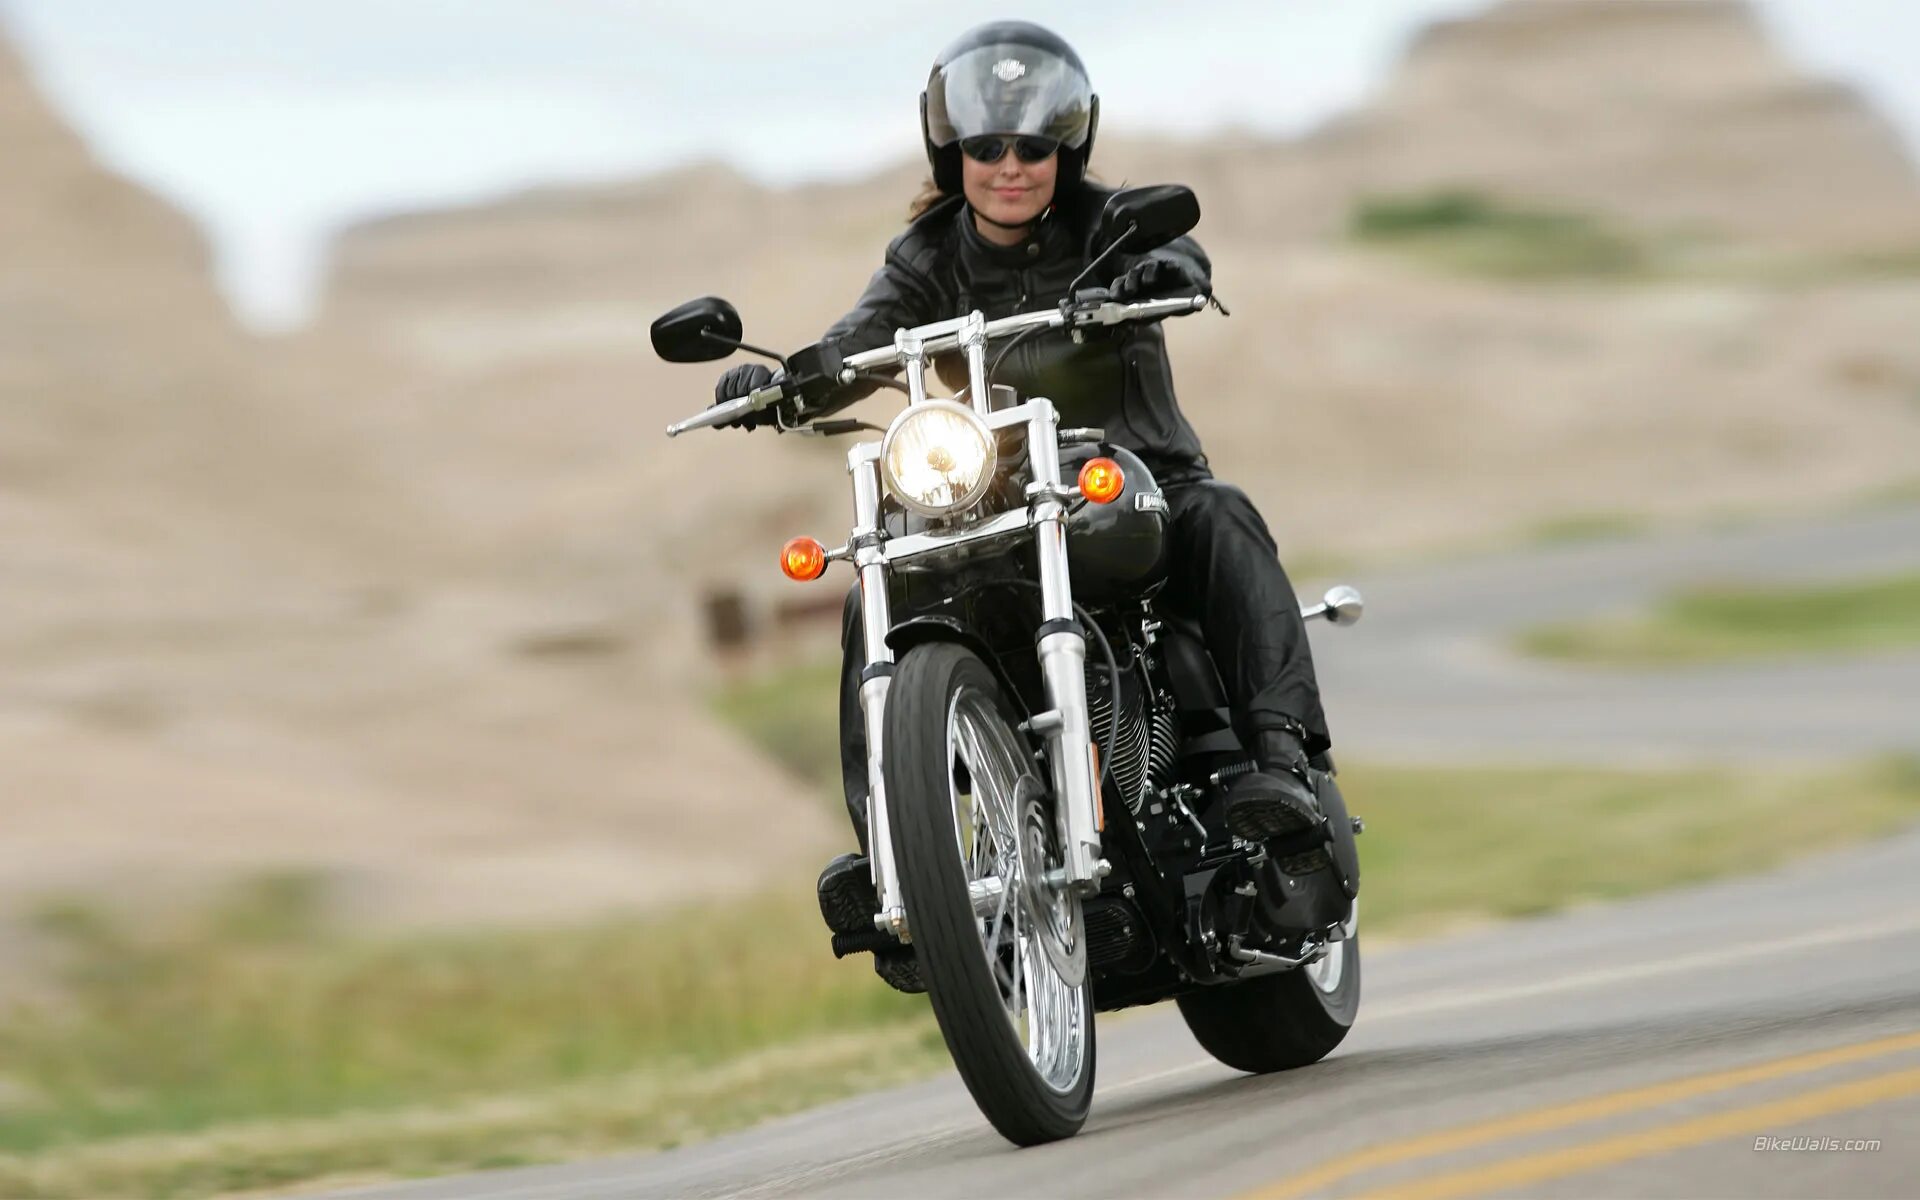 Harley Davidson 2006 Softail Heritage. Женский Харлей Дэвидсон мотоцикл. Харлей Дэвидсон чоппер езда. Девушка на мотоцикле. 16 лет можно ездить на мотоцикле